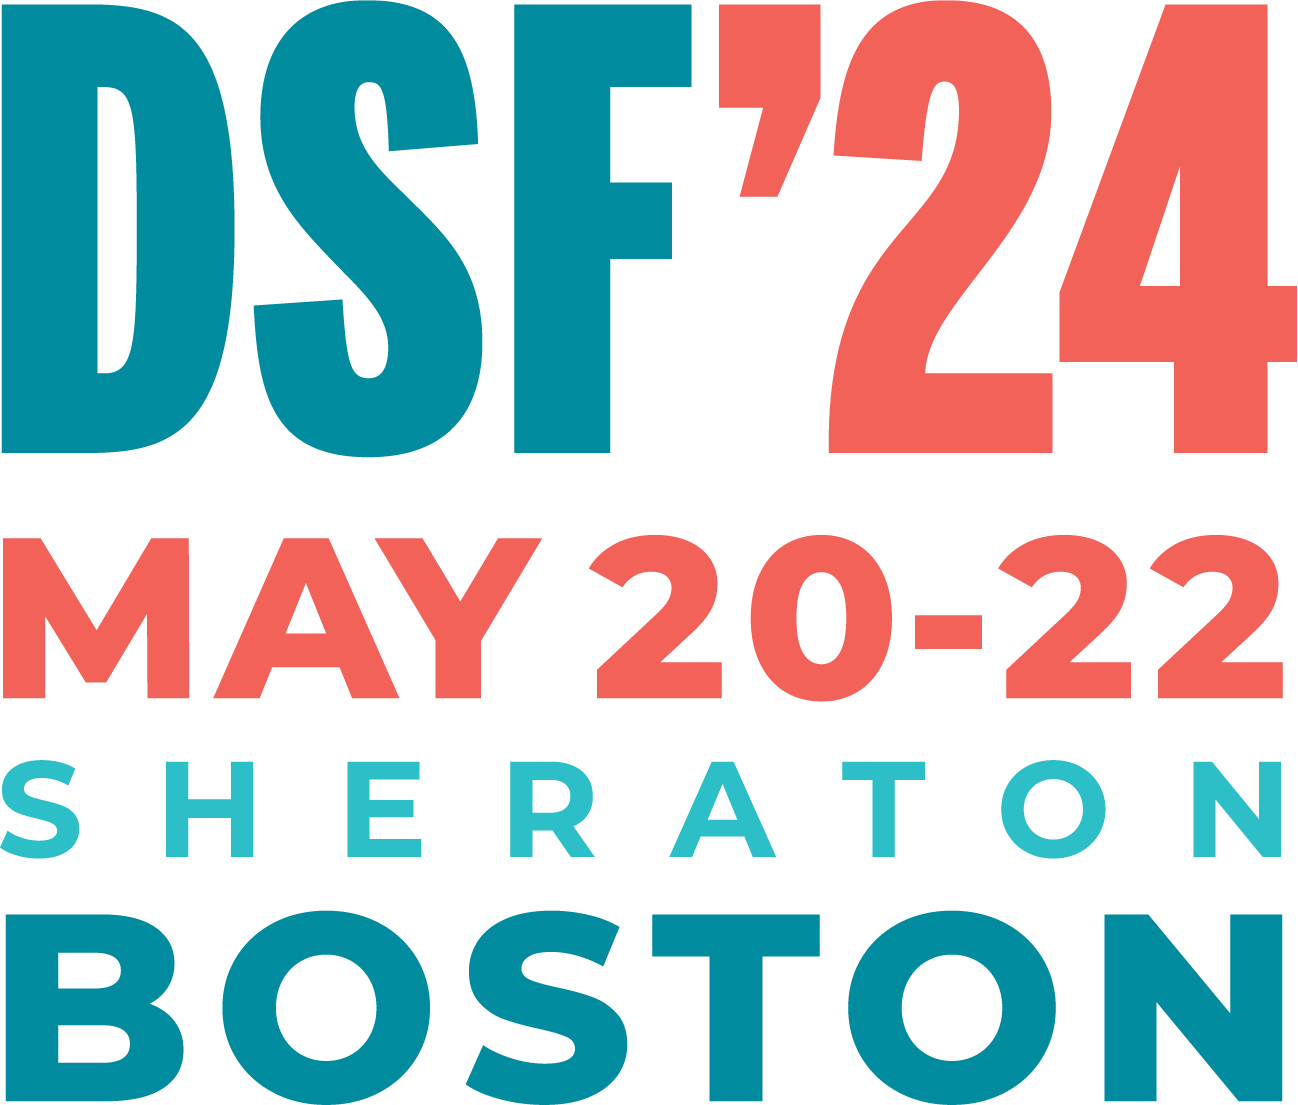 DSF 24, May 20 to 22, Sheraton, Boston